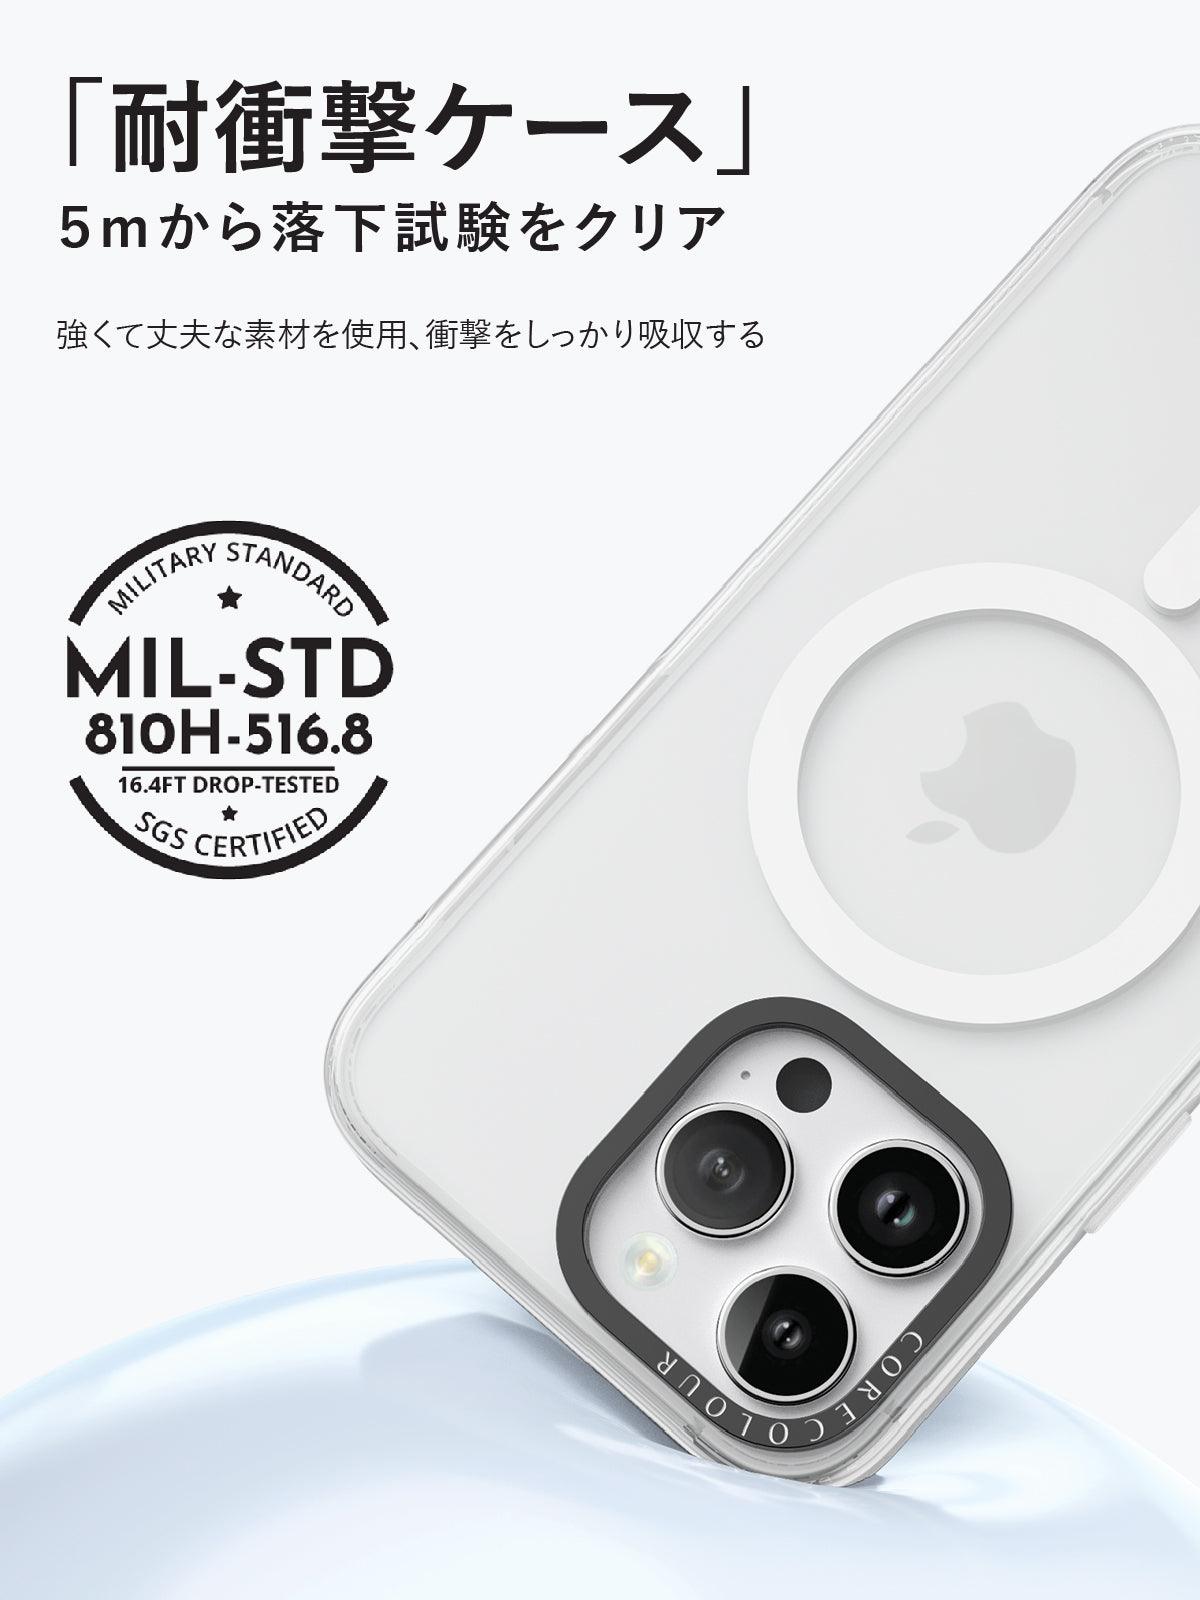 iPhone 12 Pro ピンク チェック柄 スマホケース - CORECOLOUR